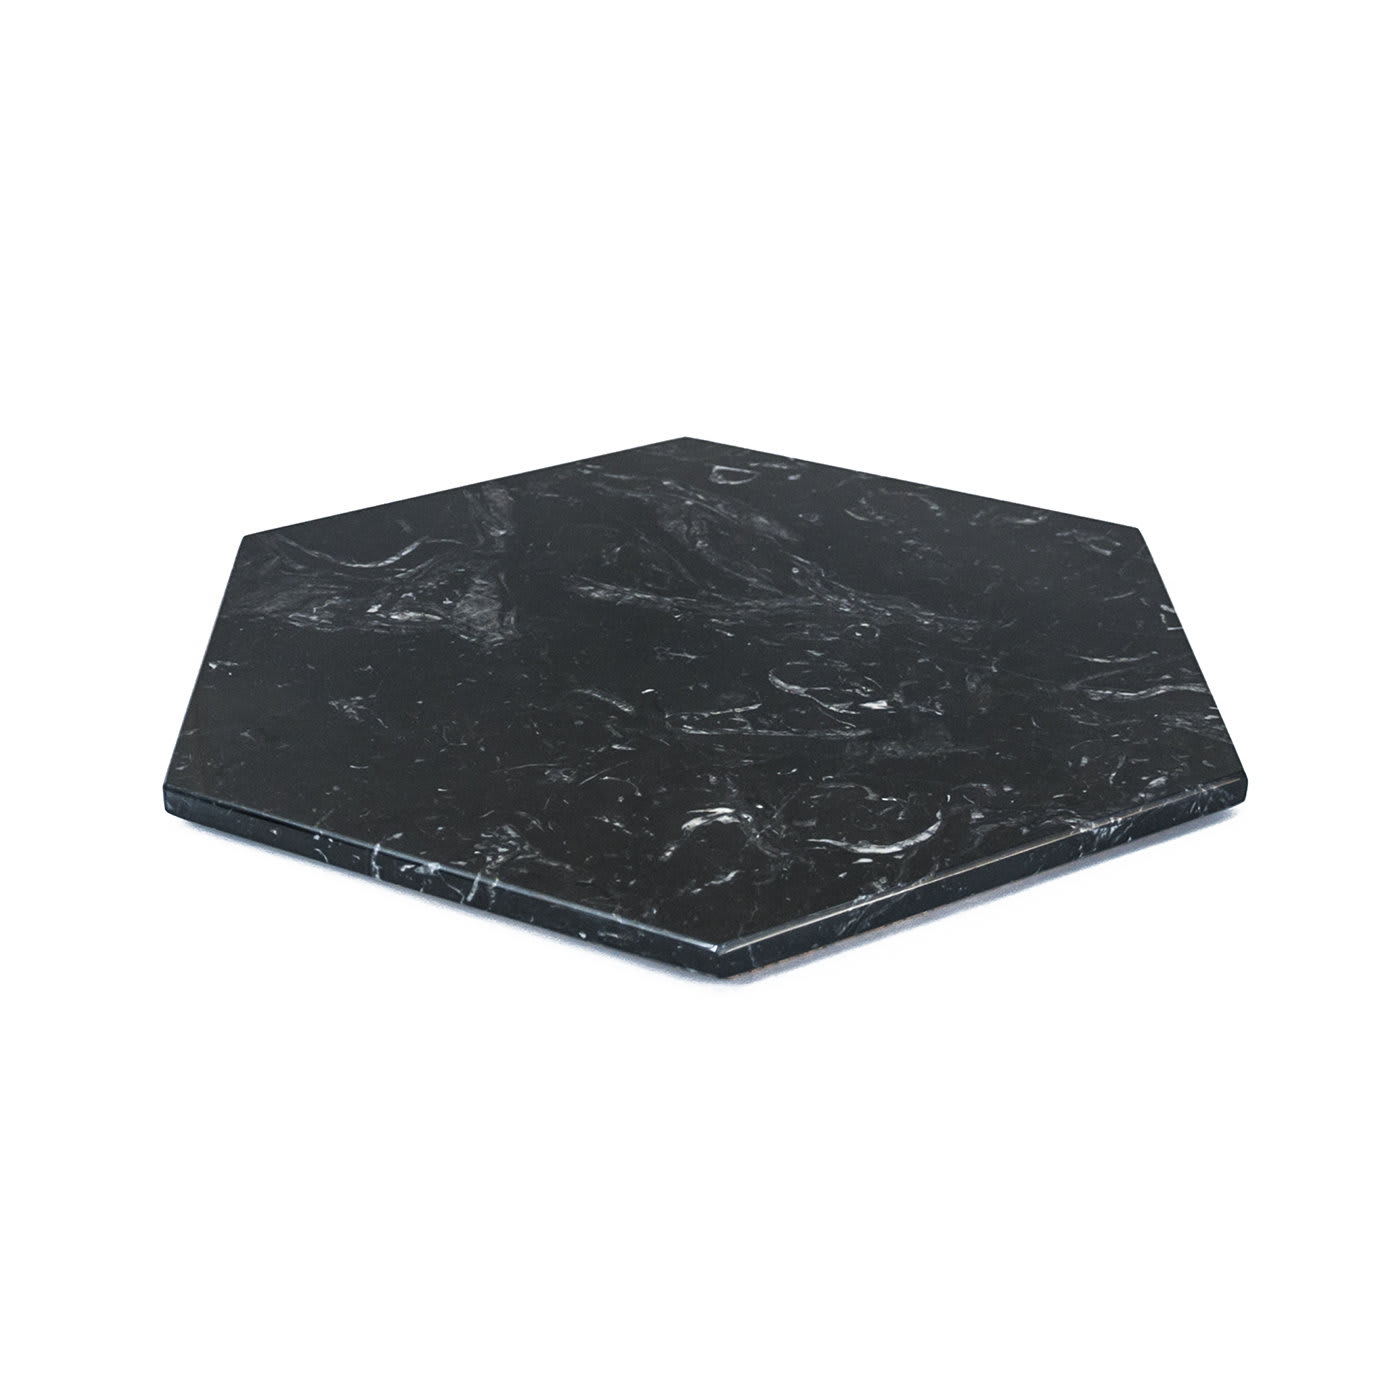 Hexagonal Black Marble Plate - FiammettaV Home Collection